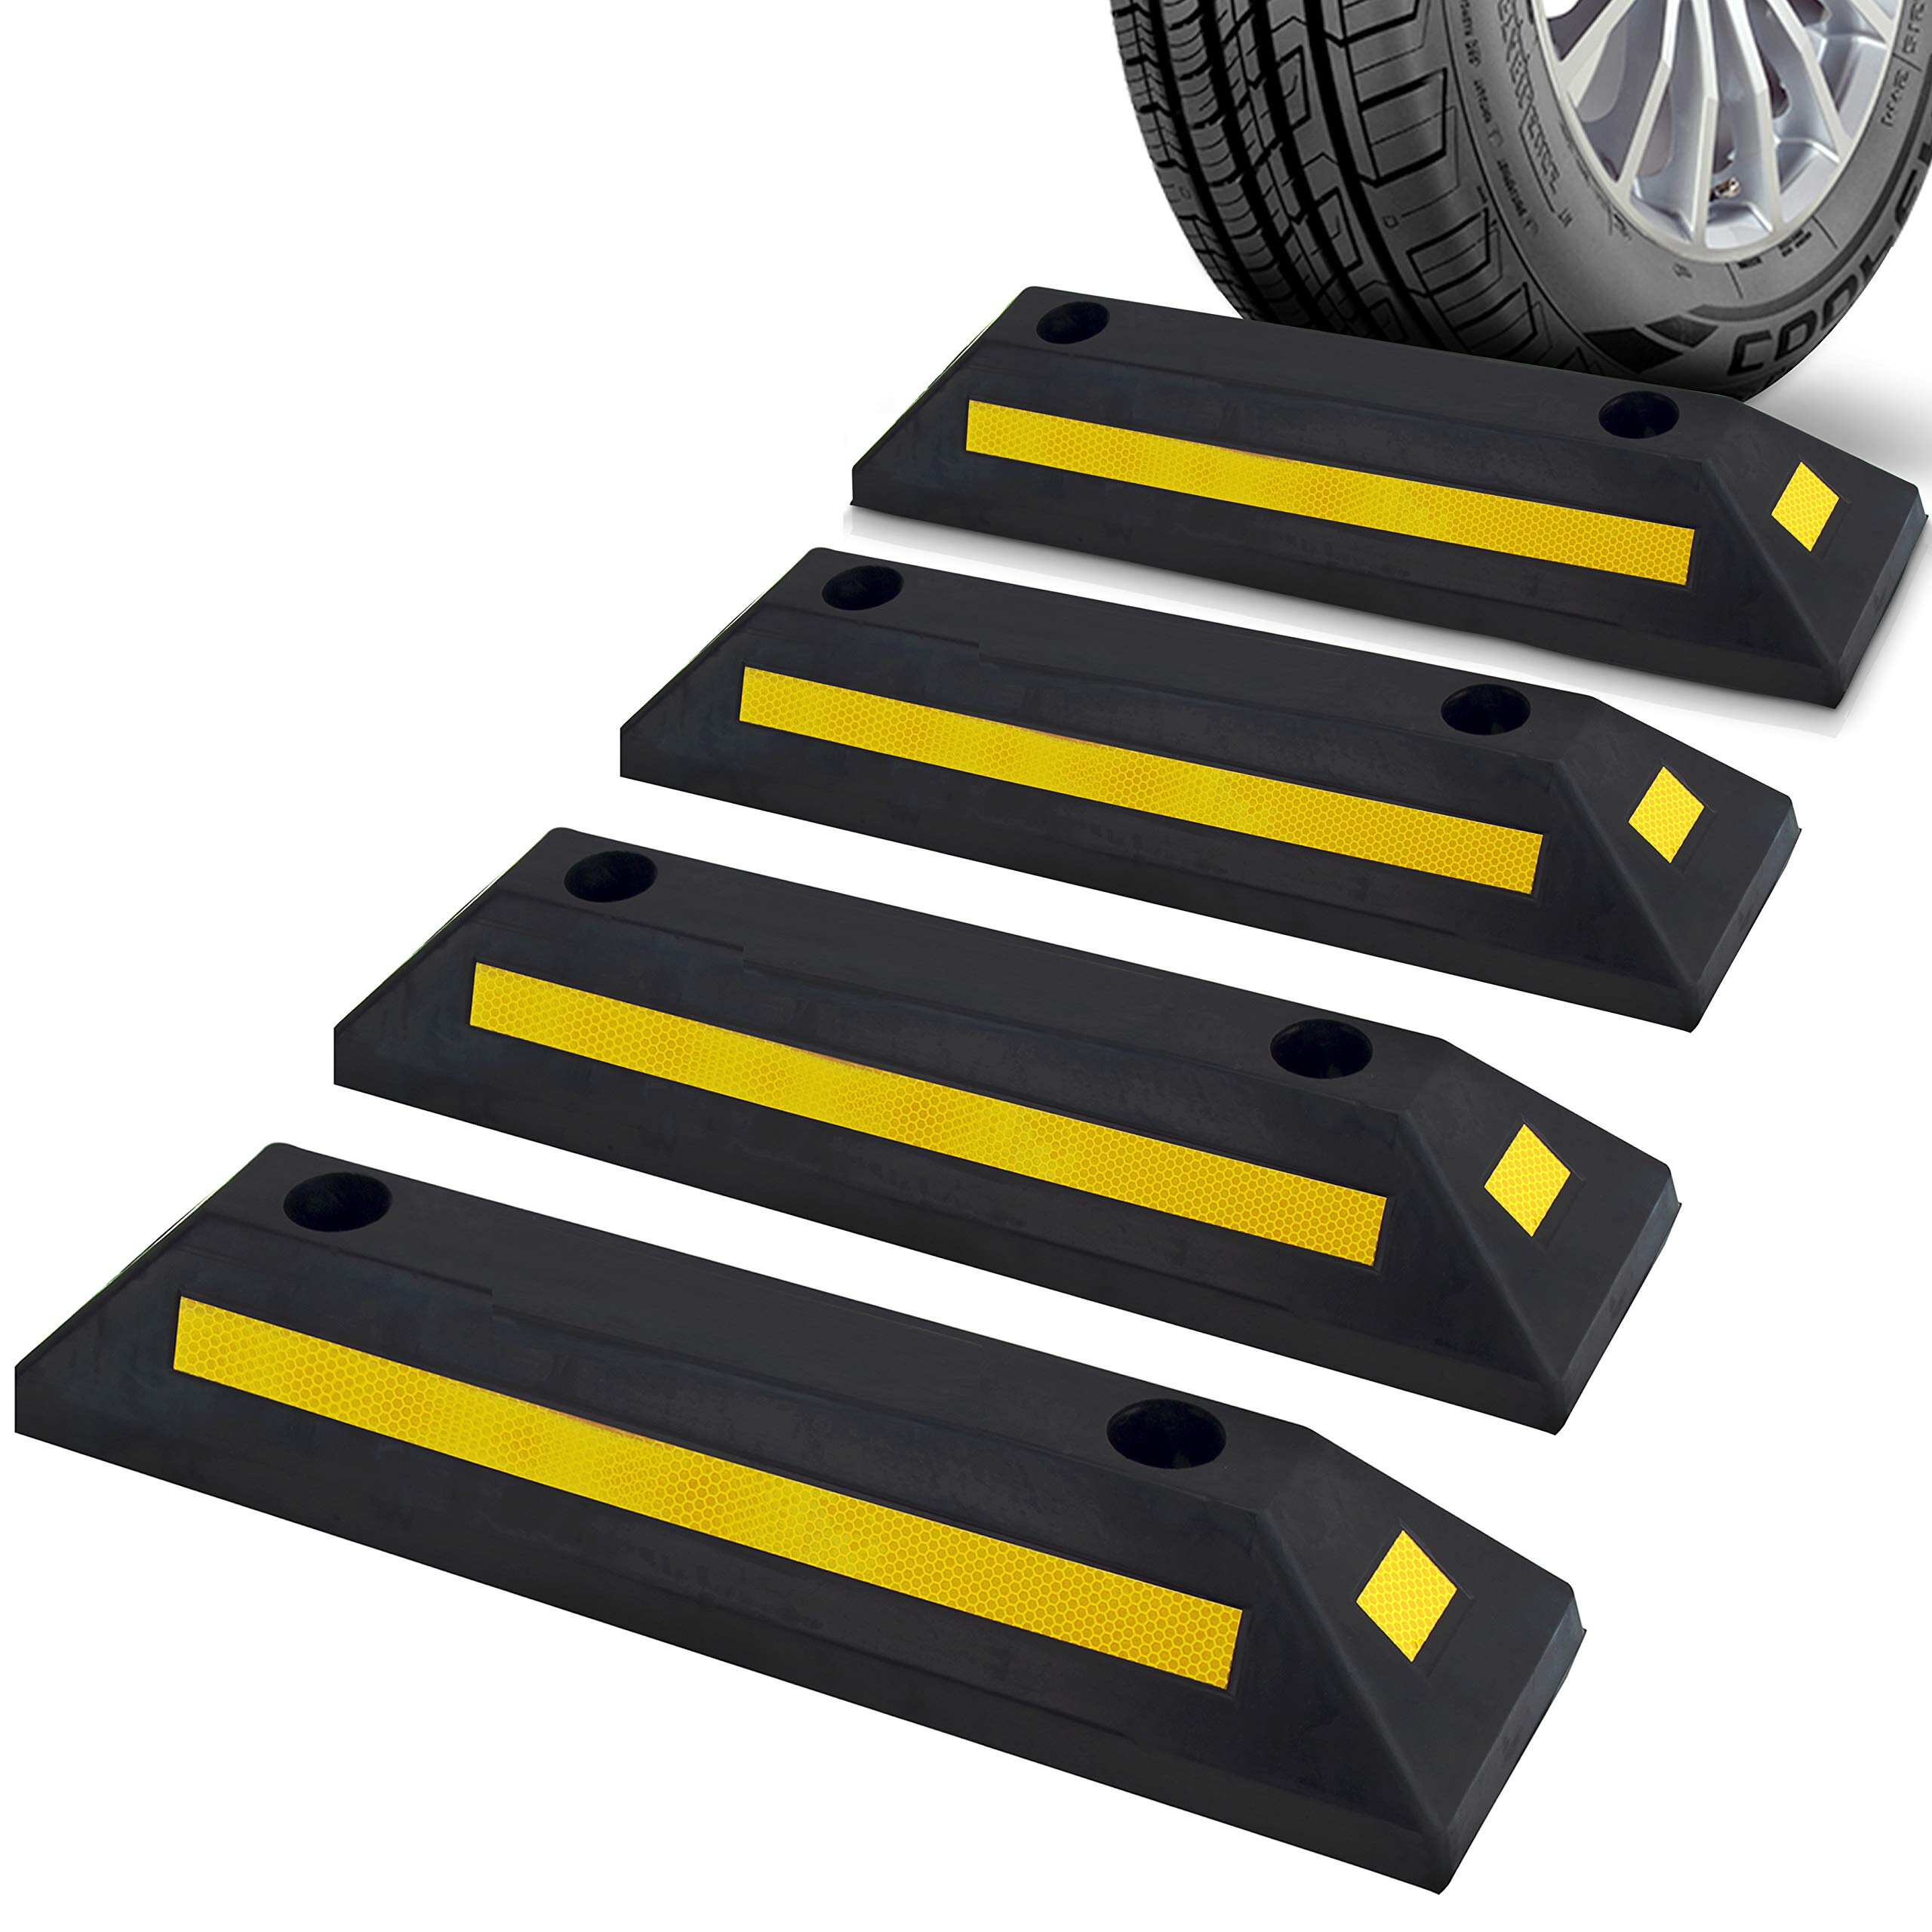 Garage parking assistant Driveway wheel stopper Parking barrier 